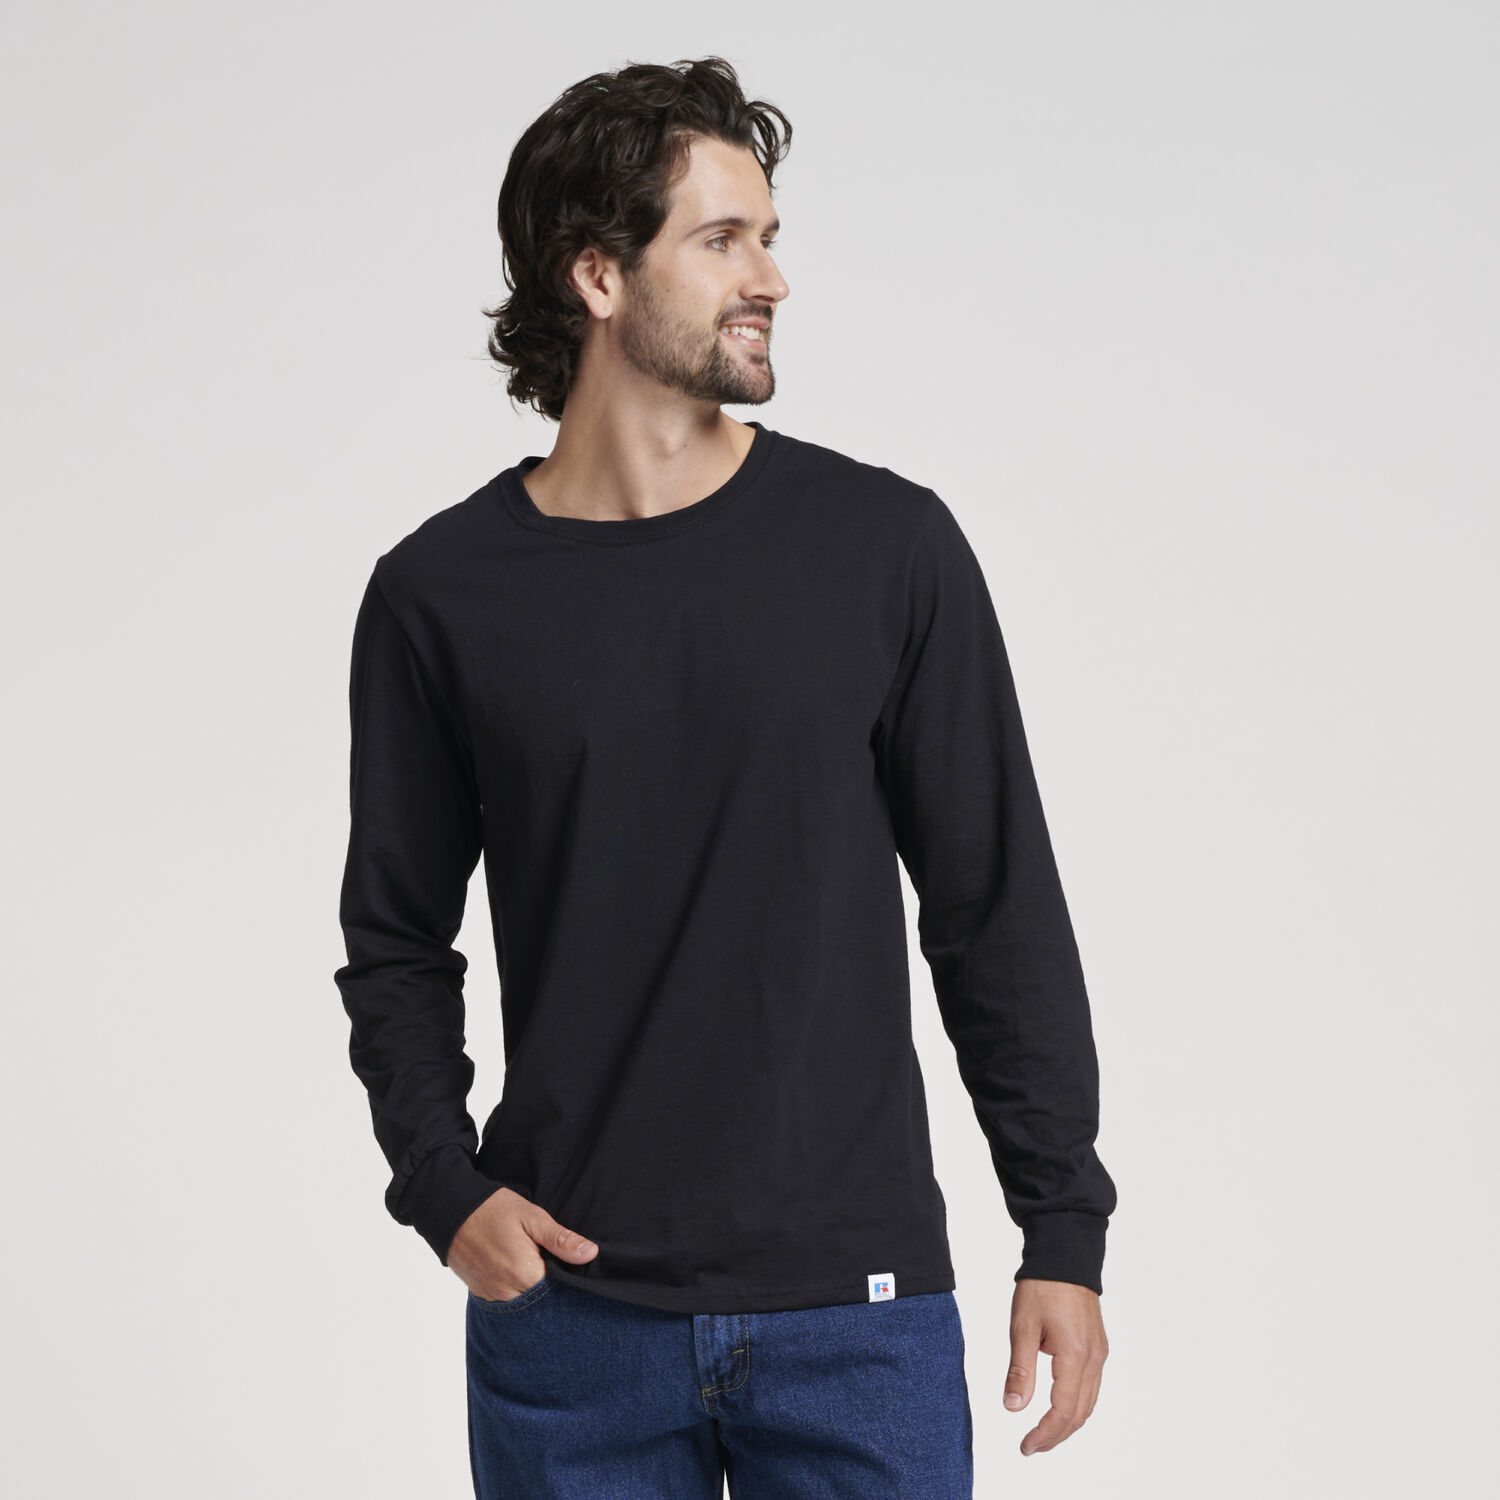 Men's Cotton Performance Long Sleeve T-Shirt Black